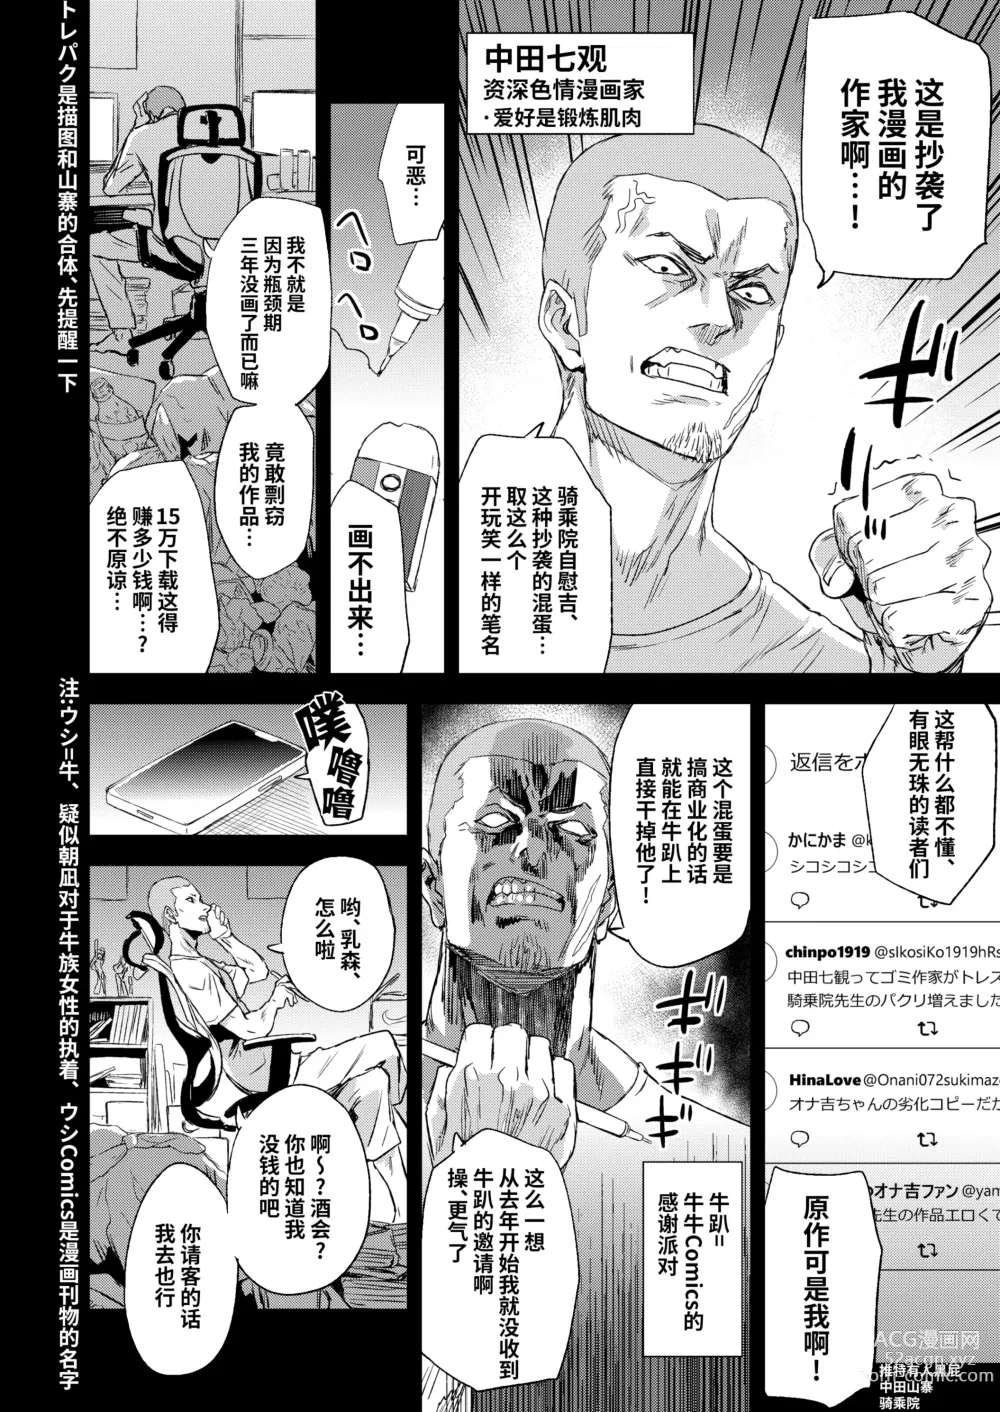 Page 4 of doujinshi 骑乘院老师的色情漫画脑